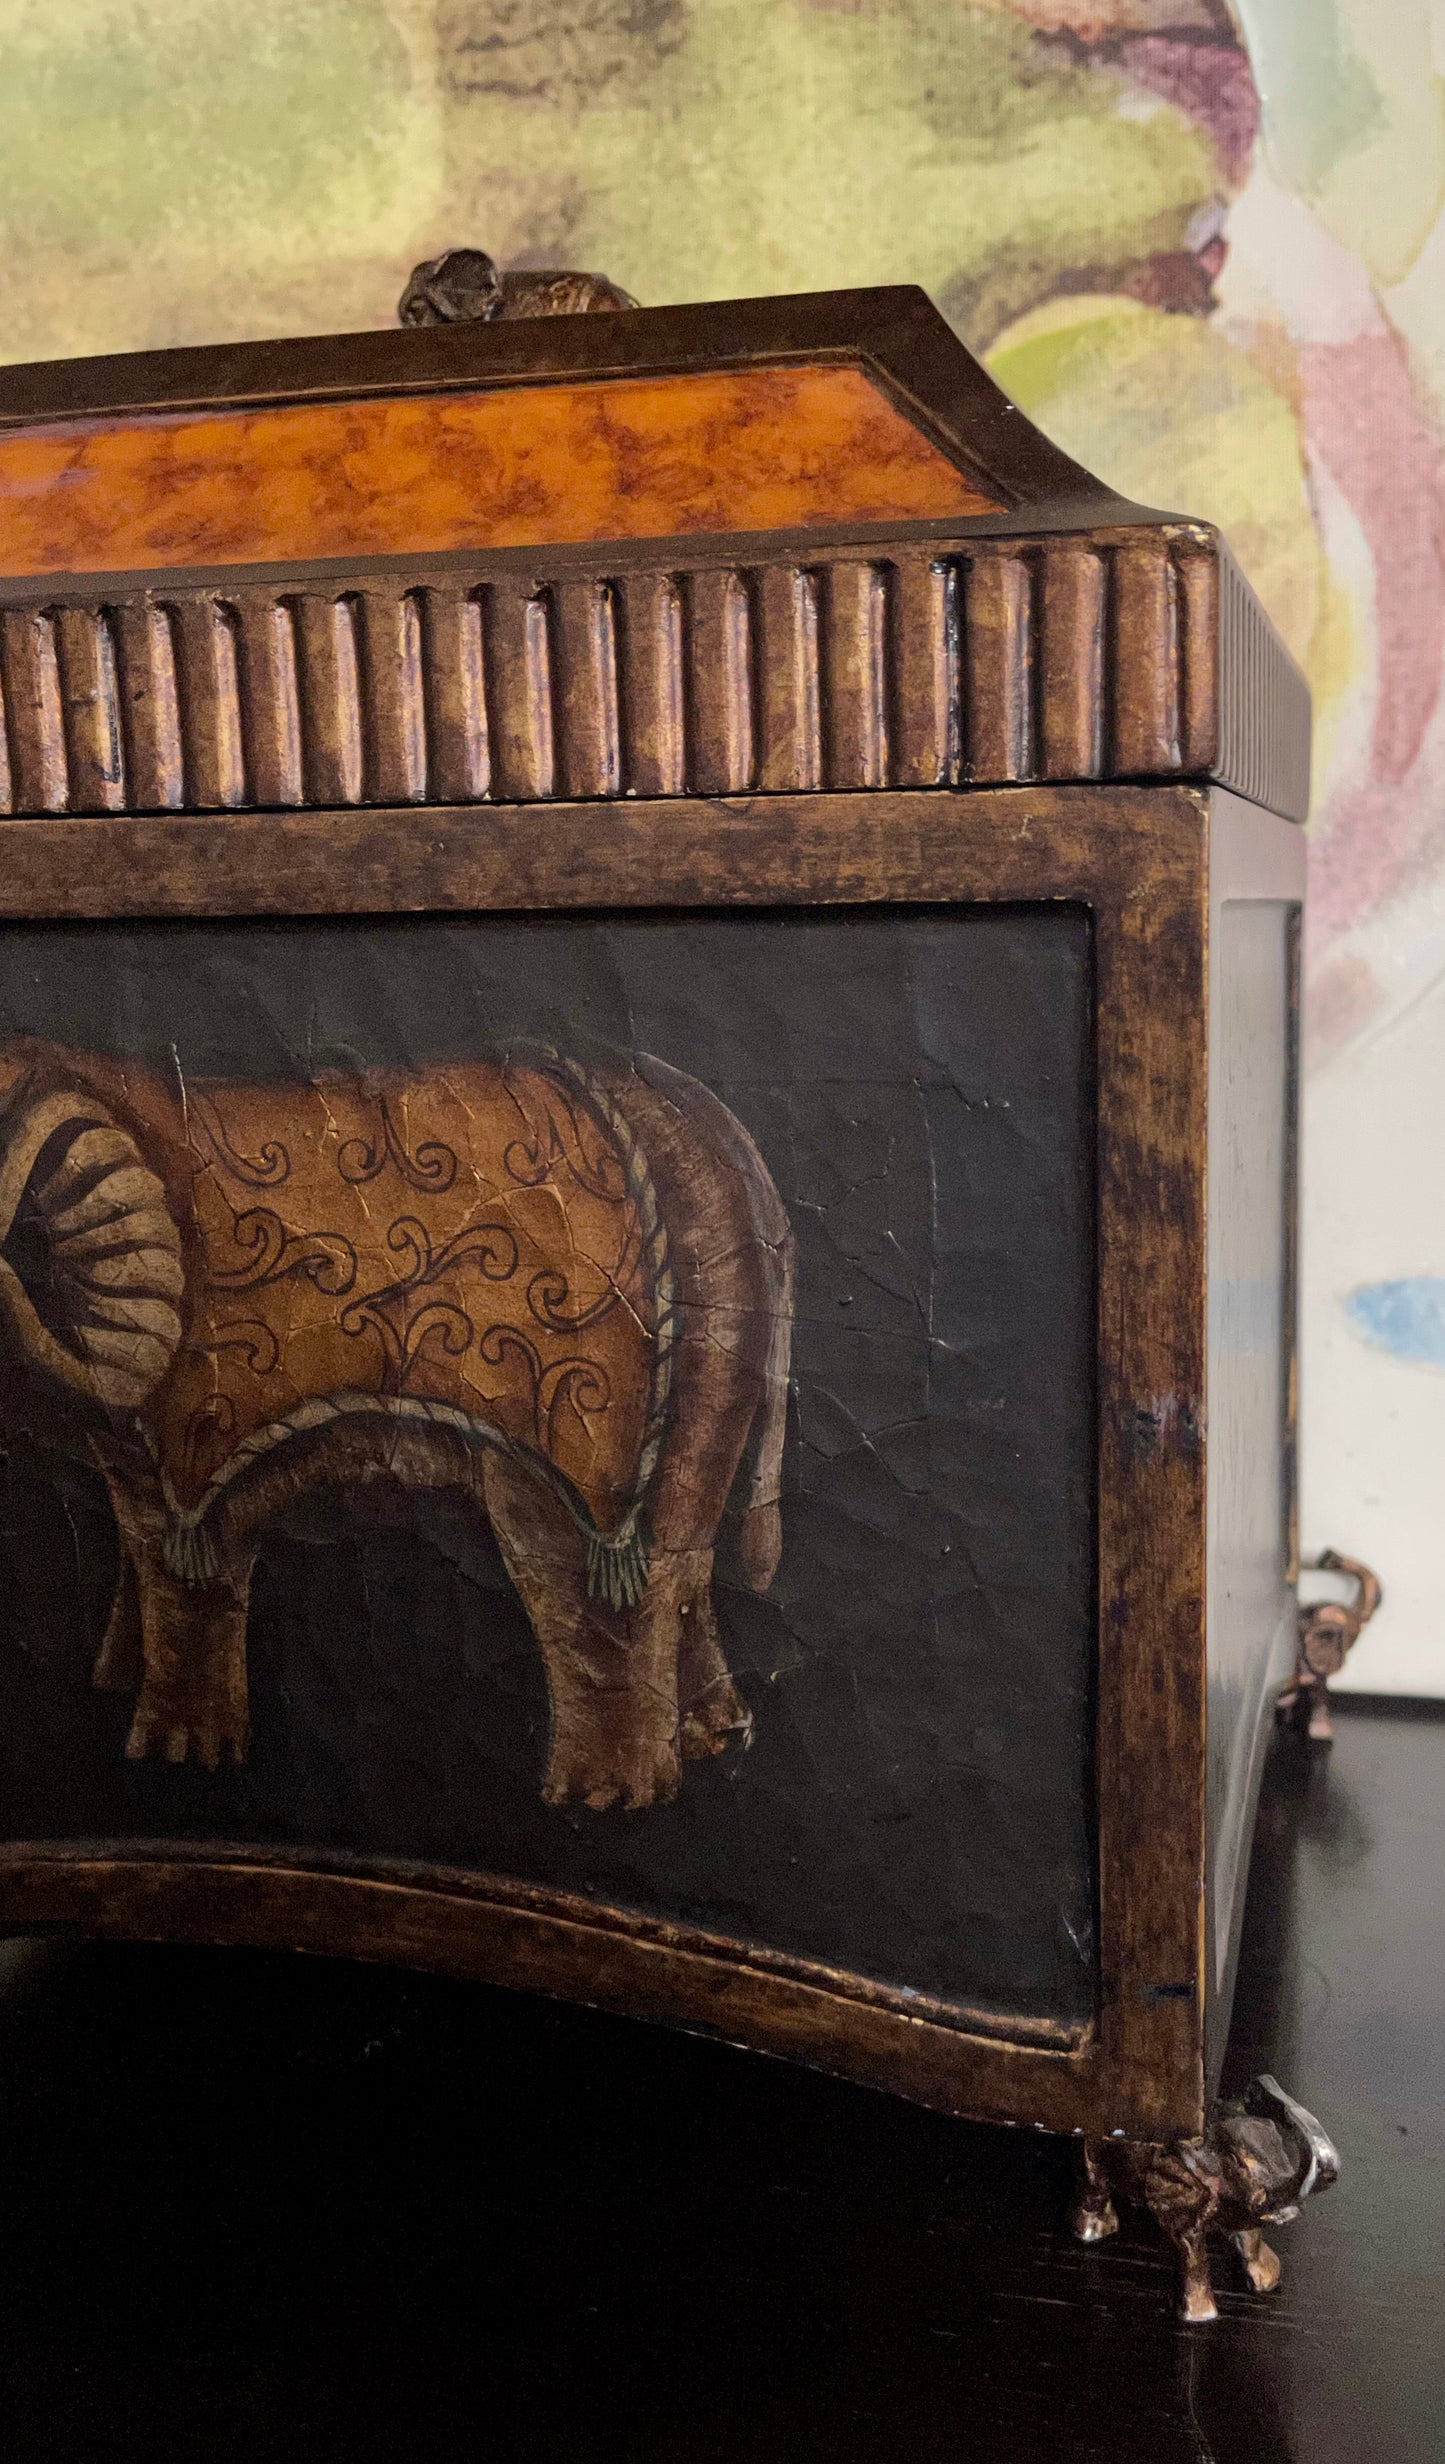 Uniquely Beautiful Elephant Decorators Box, Elephant Chest, Home Decor